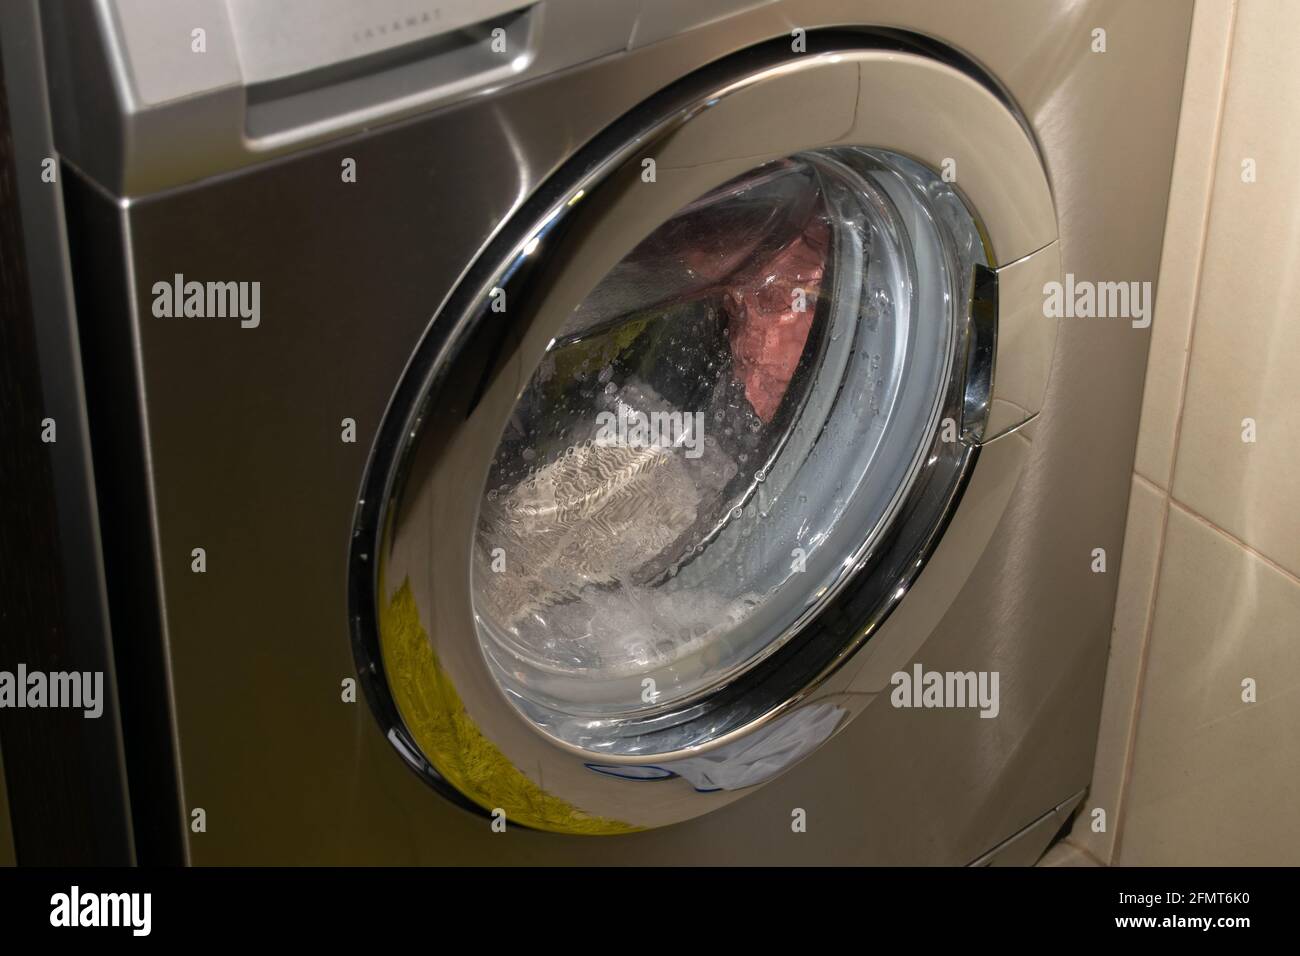 Aeg inox front clothes washing machine on job, how to do Laundry Stock Photo